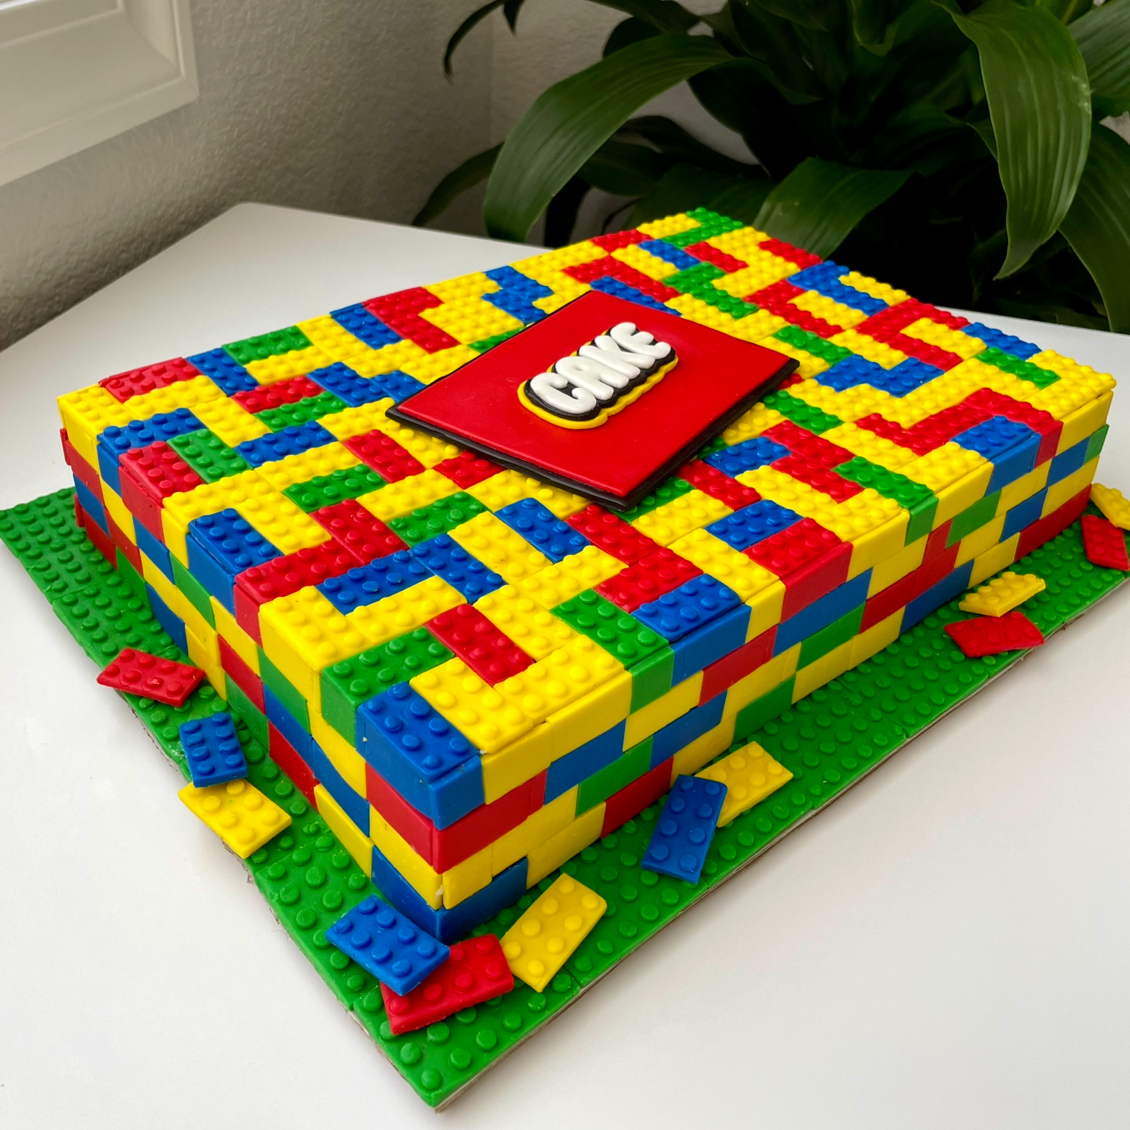 Building Block Cake Kit